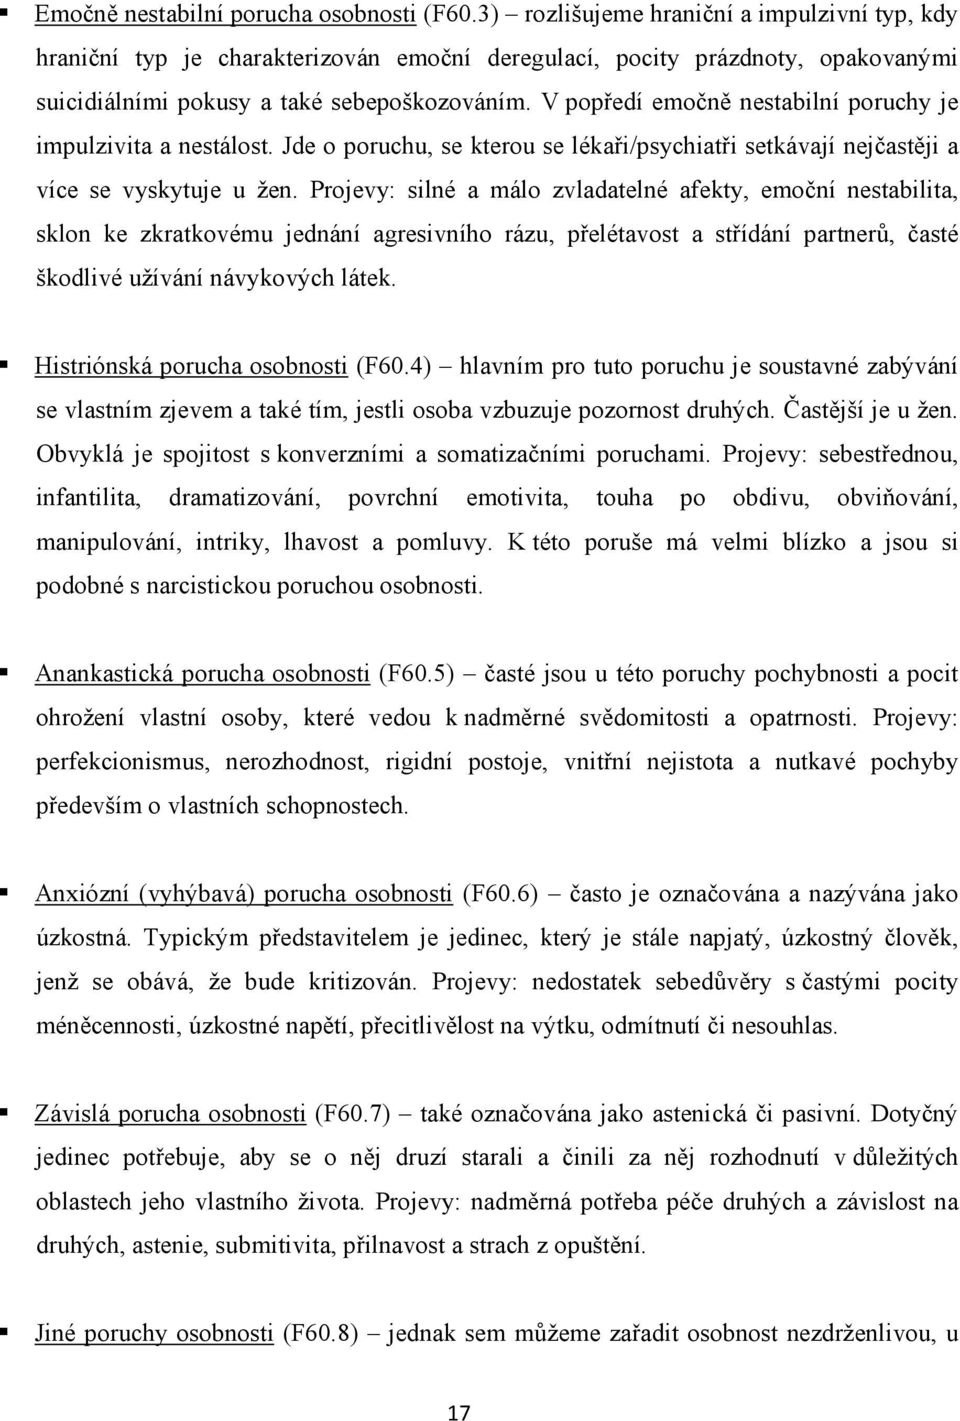 UNIVERZITA KARLOVA V PRAZE. 1. lékařská fakulta - PDF Stažení zdarma